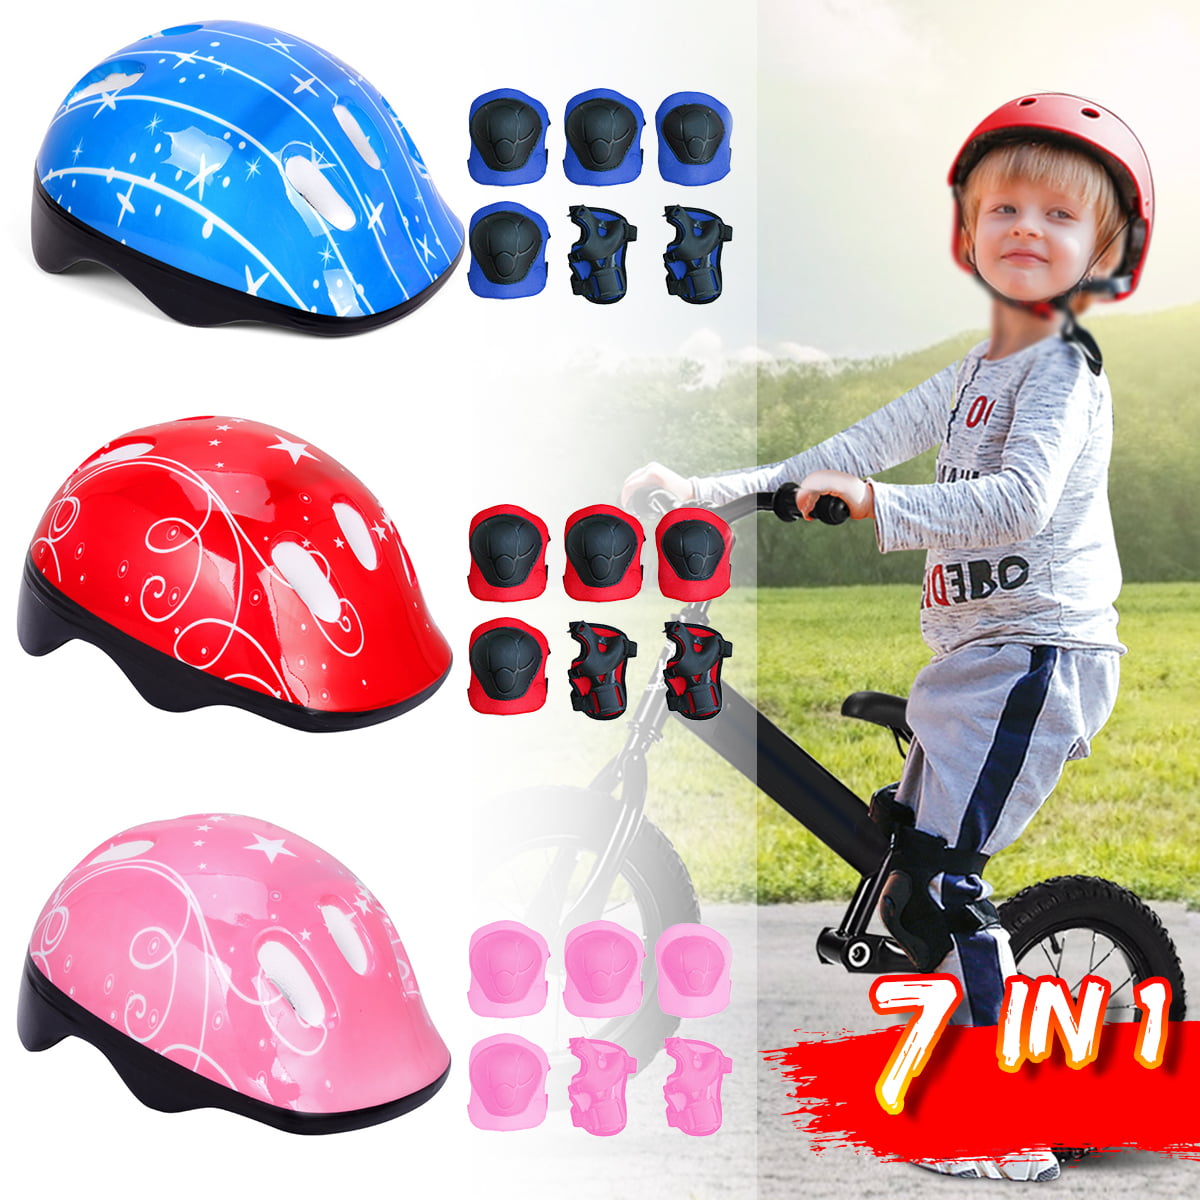 bike helmet for 7 year old